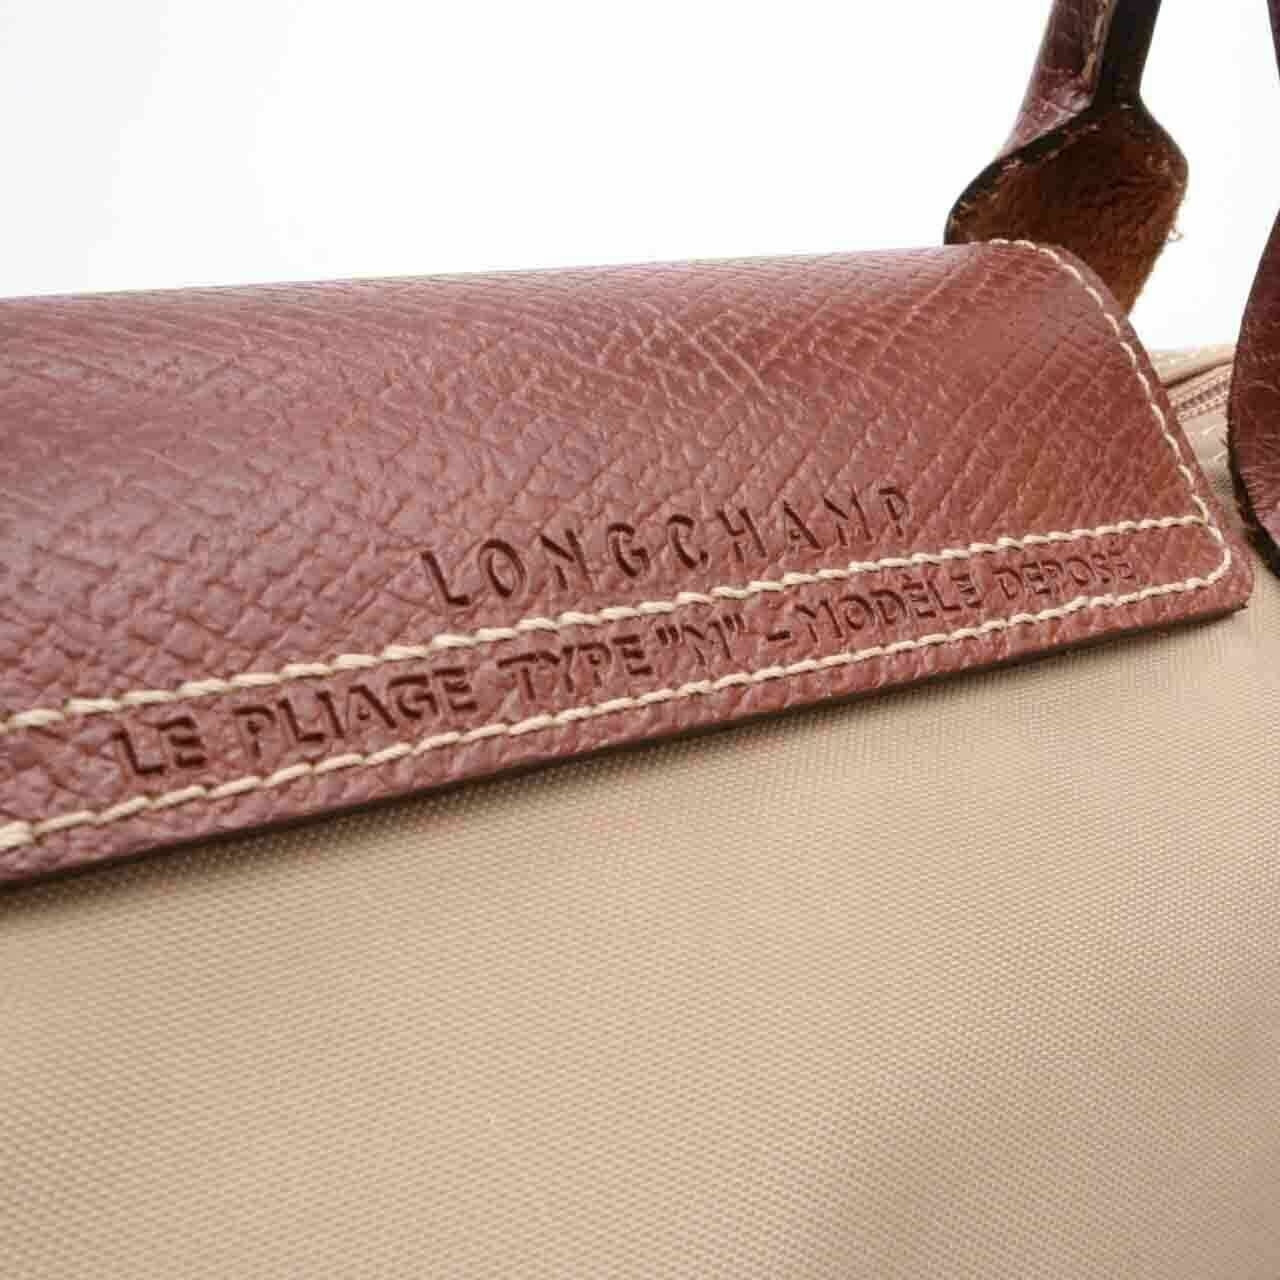 Longchamp Le Pliage Nylon